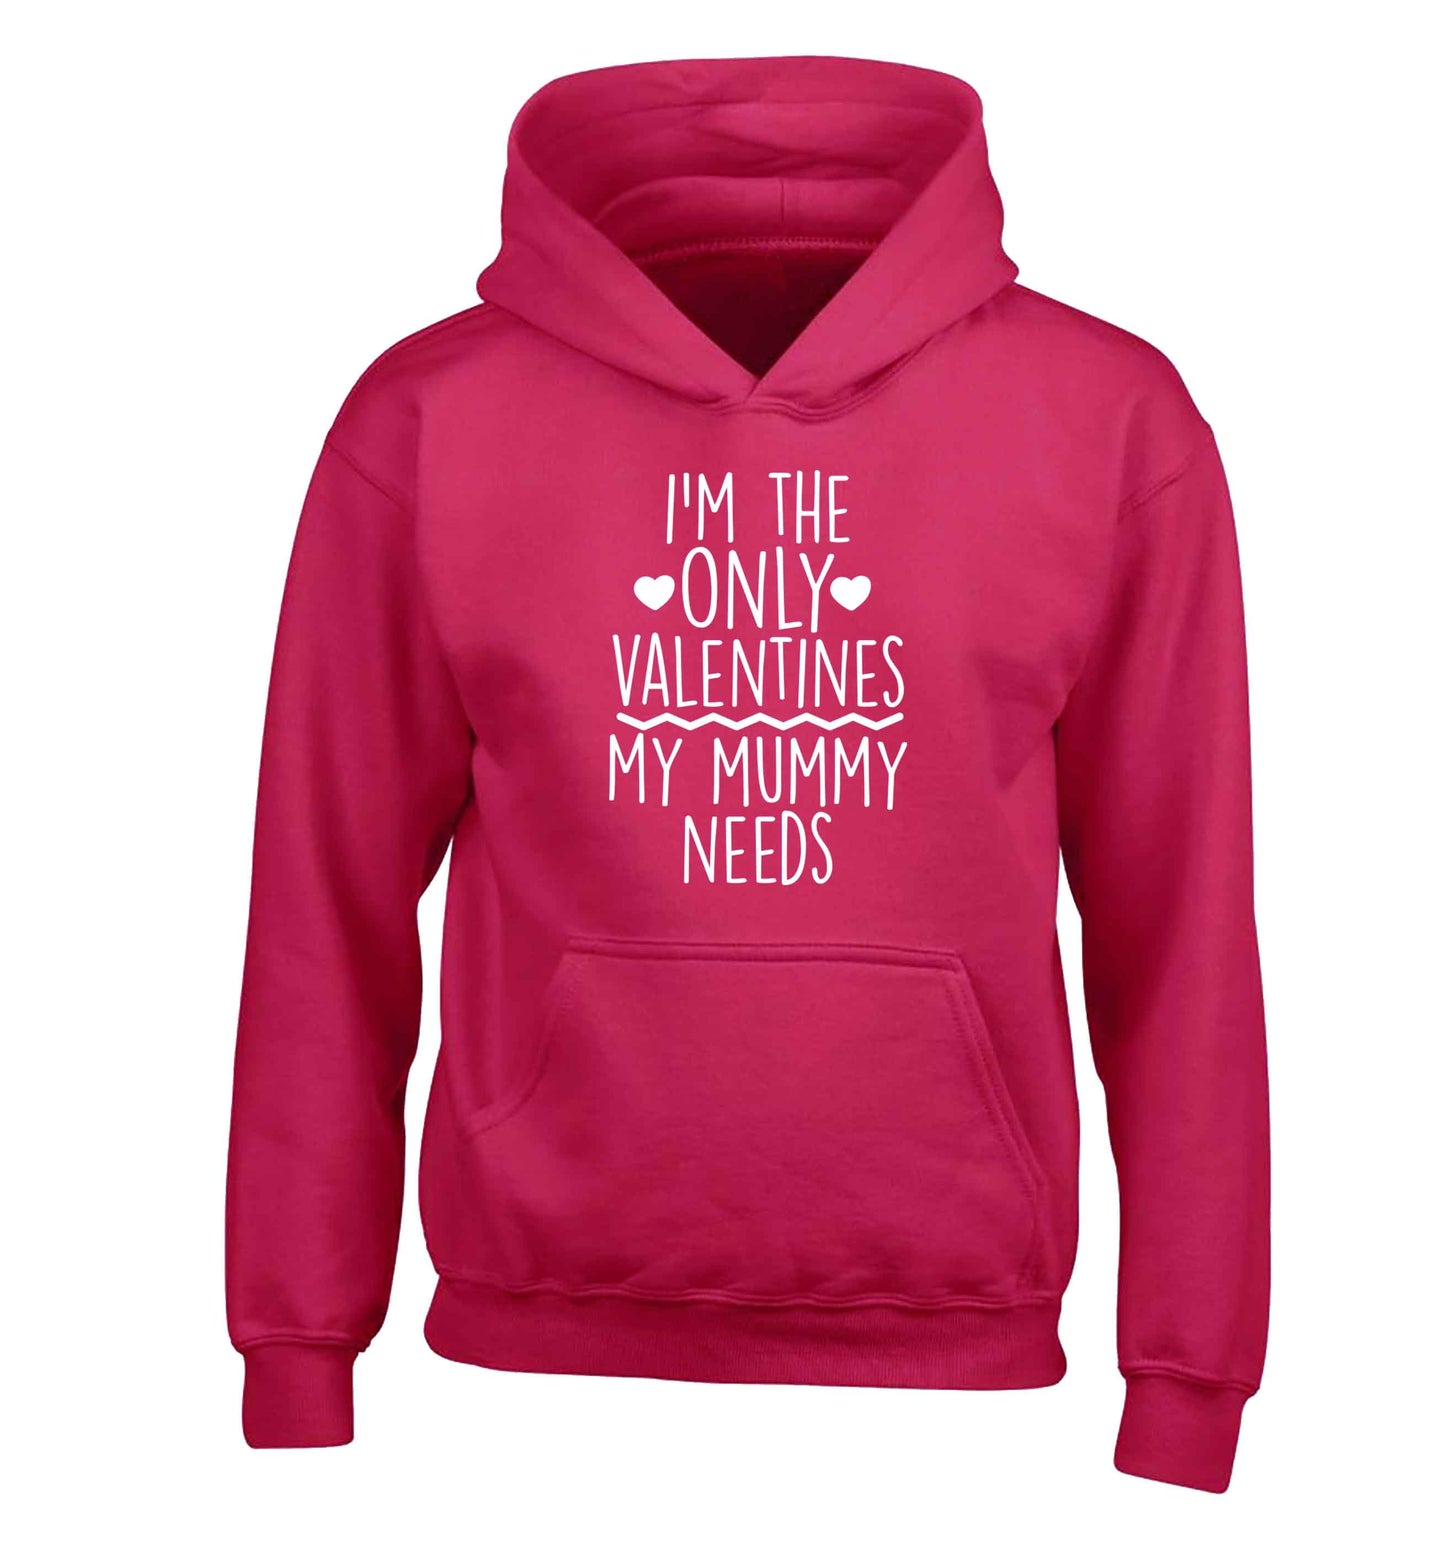 I'm the only valentines my mummy needs children's pink hoodie 12-13 Years